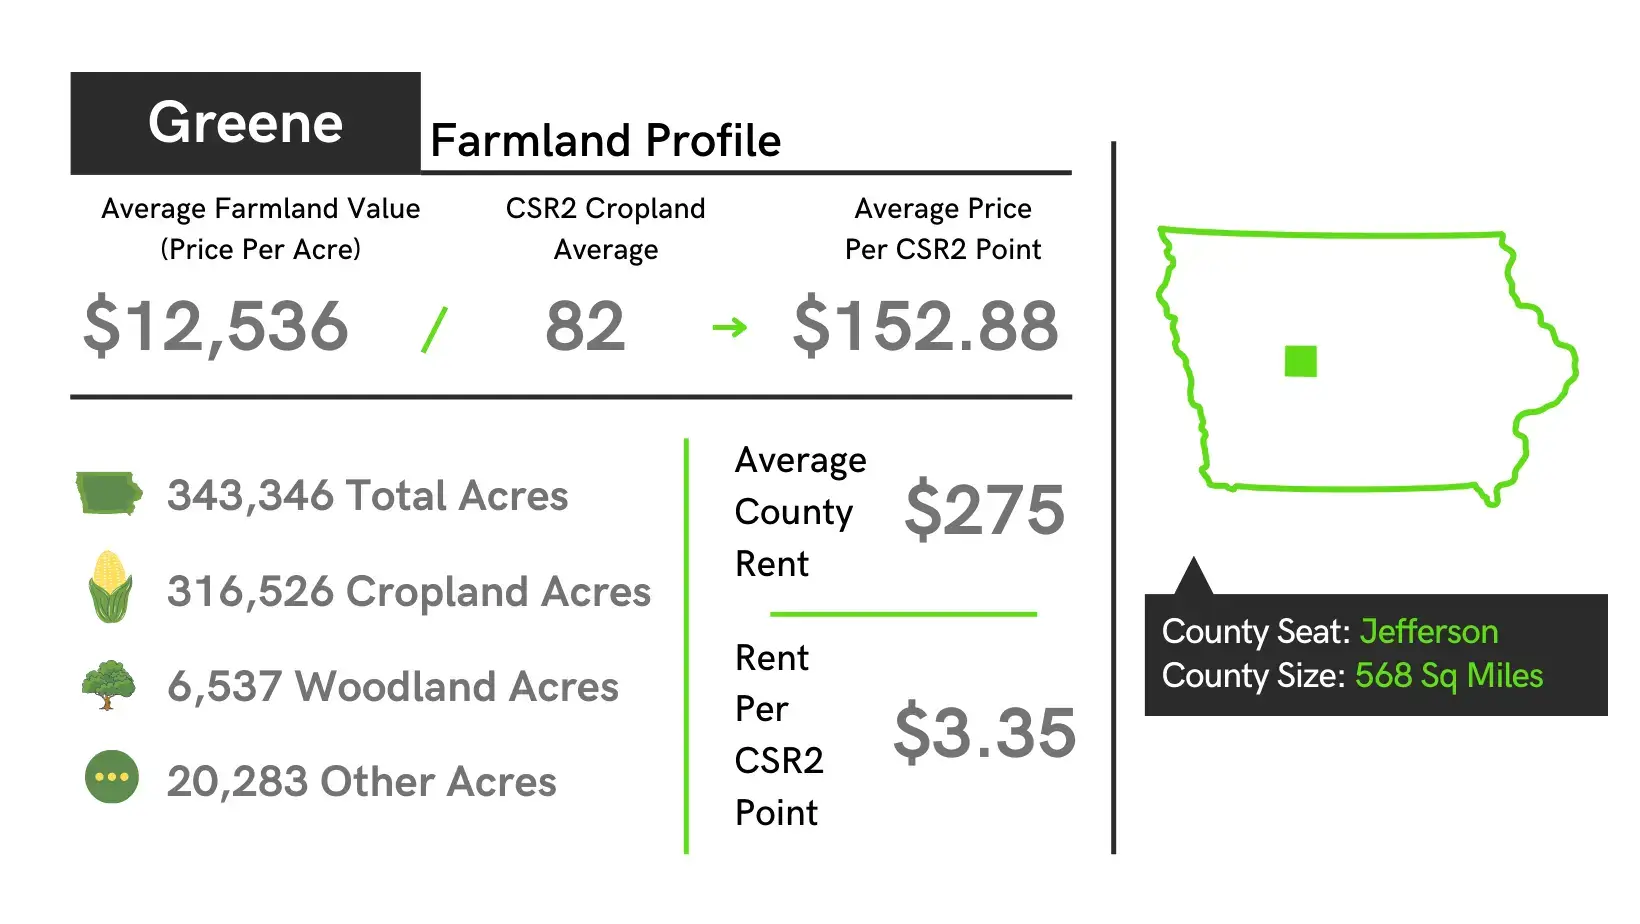 Greene County Farmland Profile